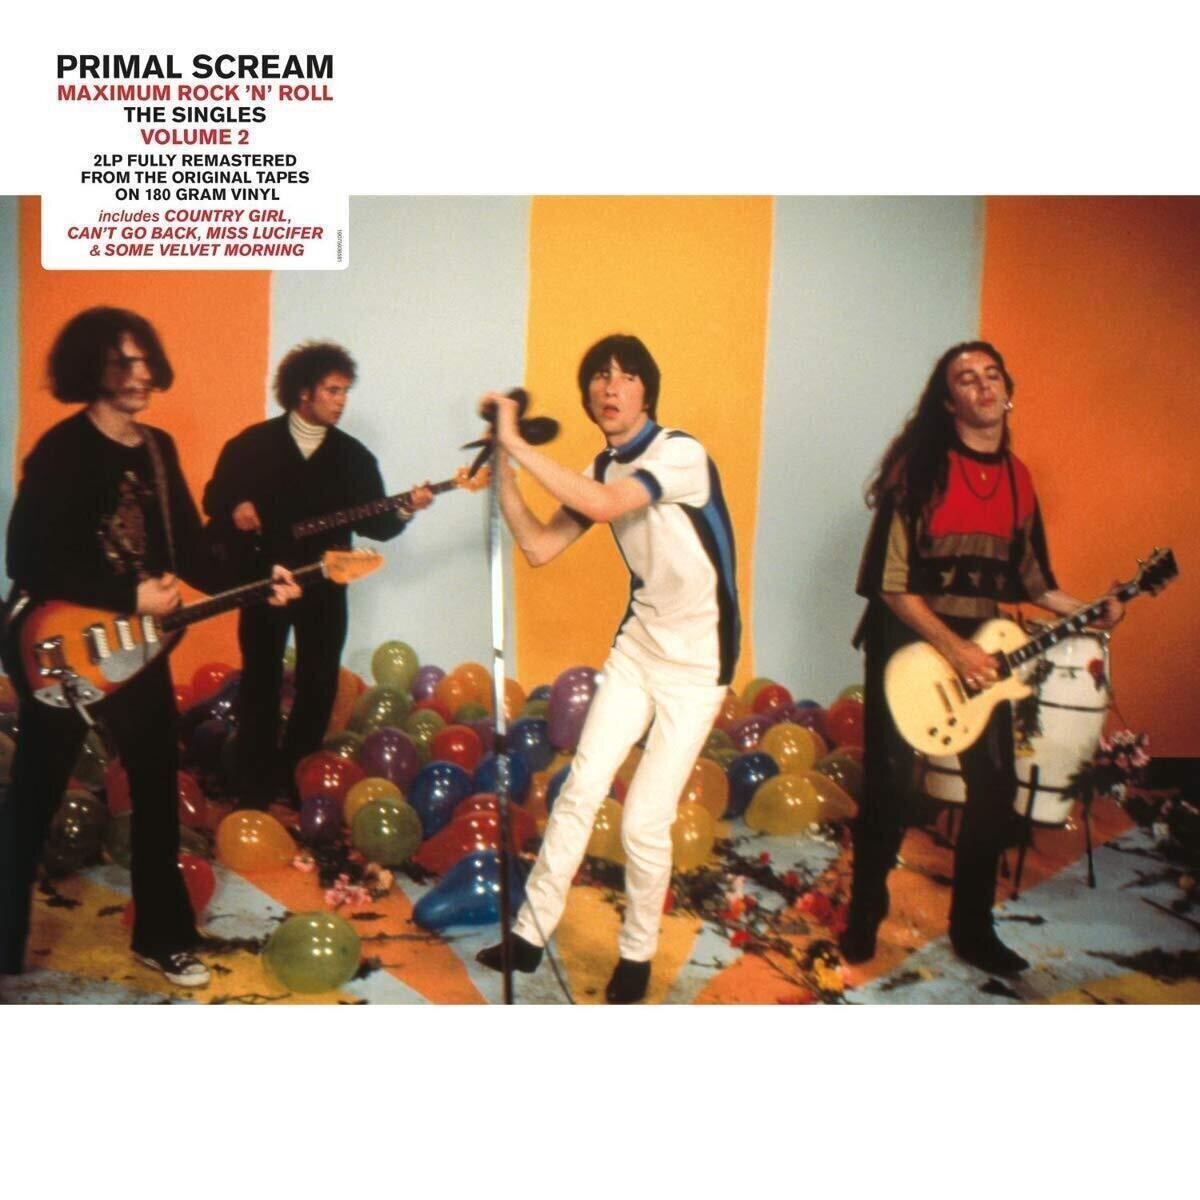 Vinyl Record Primal Scream - Maximum Rock 'N' Roll: the Singles Vol. 2 (2 LP)